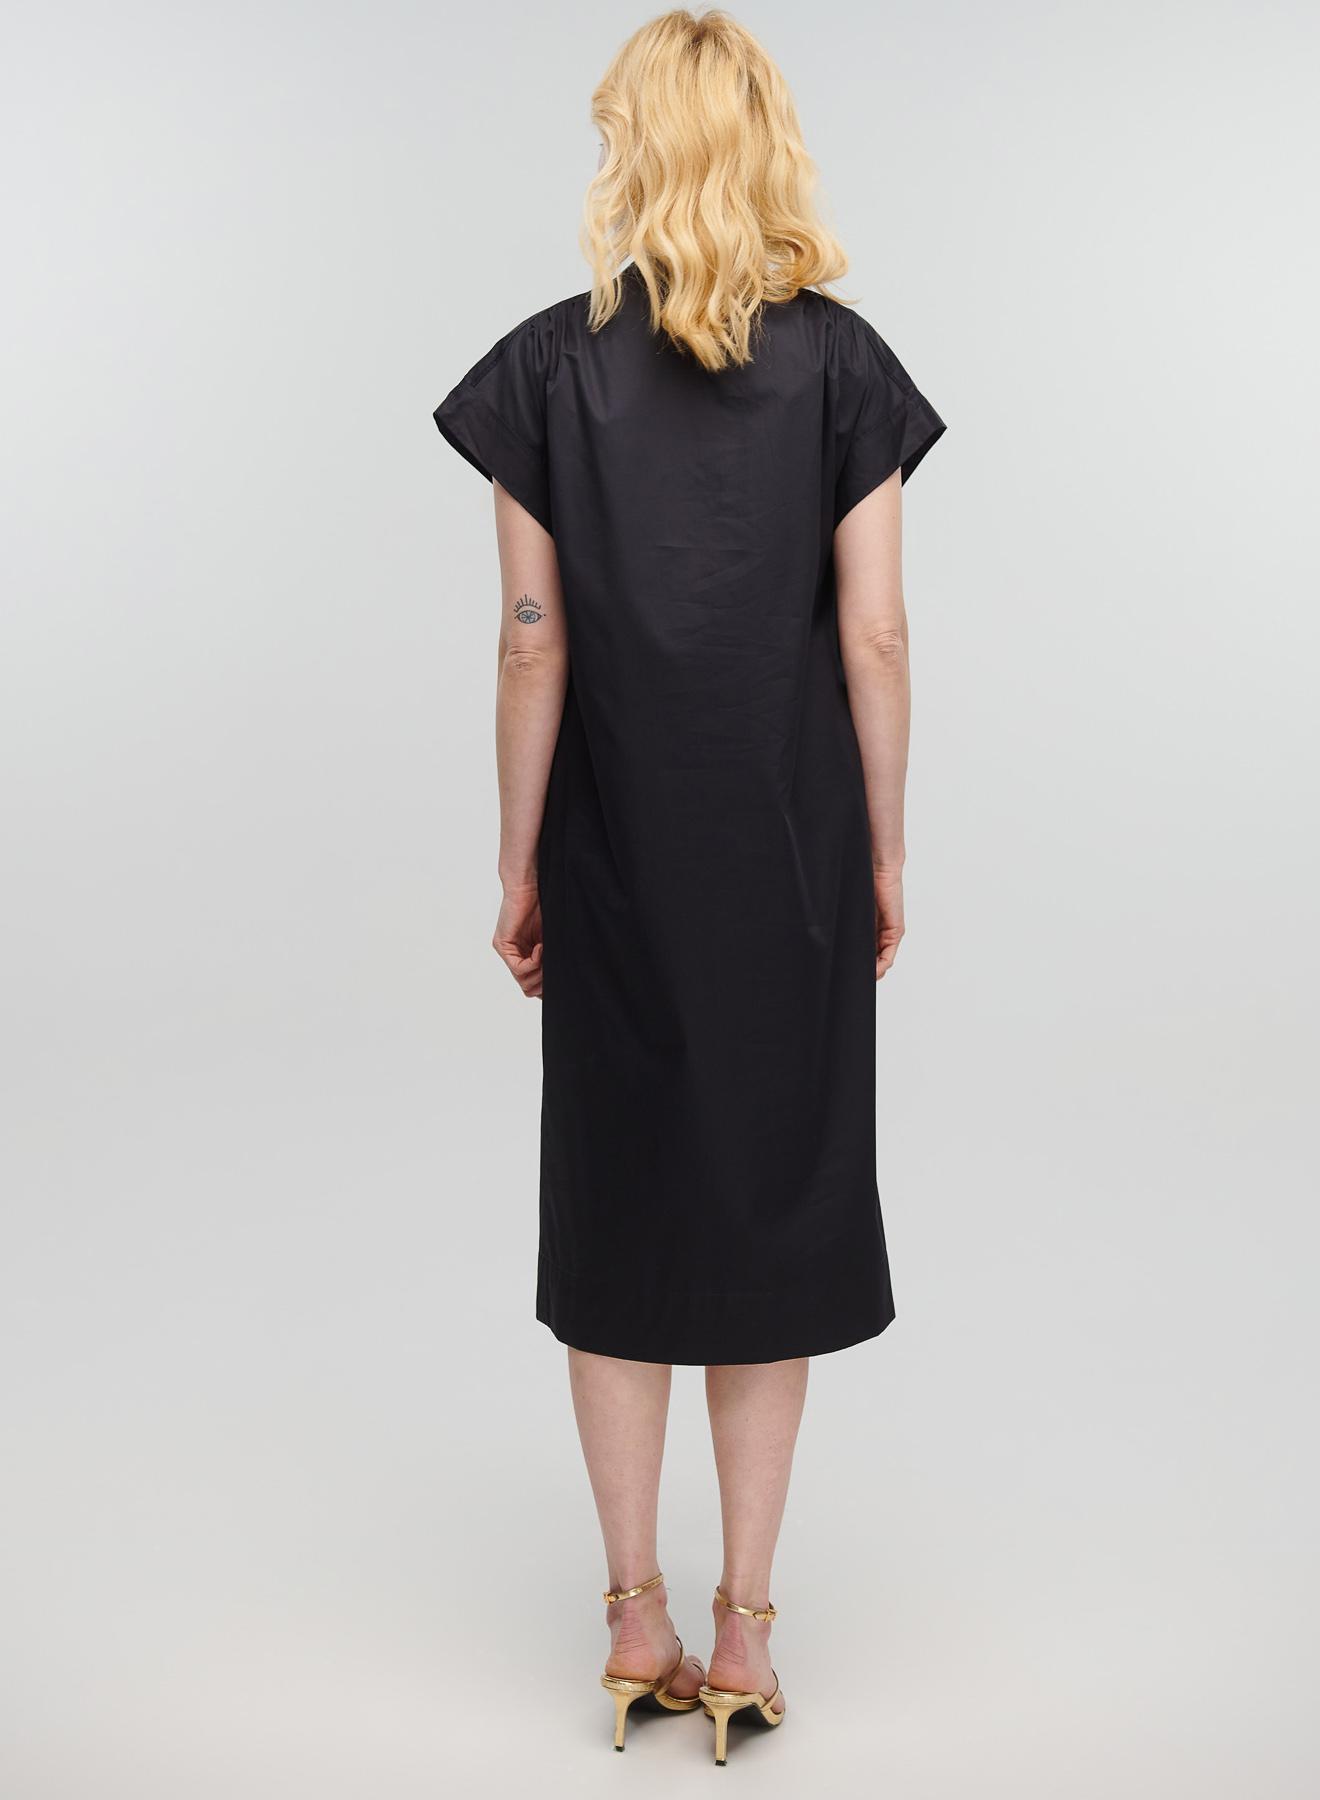 Black long sleeveless Dress with V neckline, belt and front slit Milla - 5